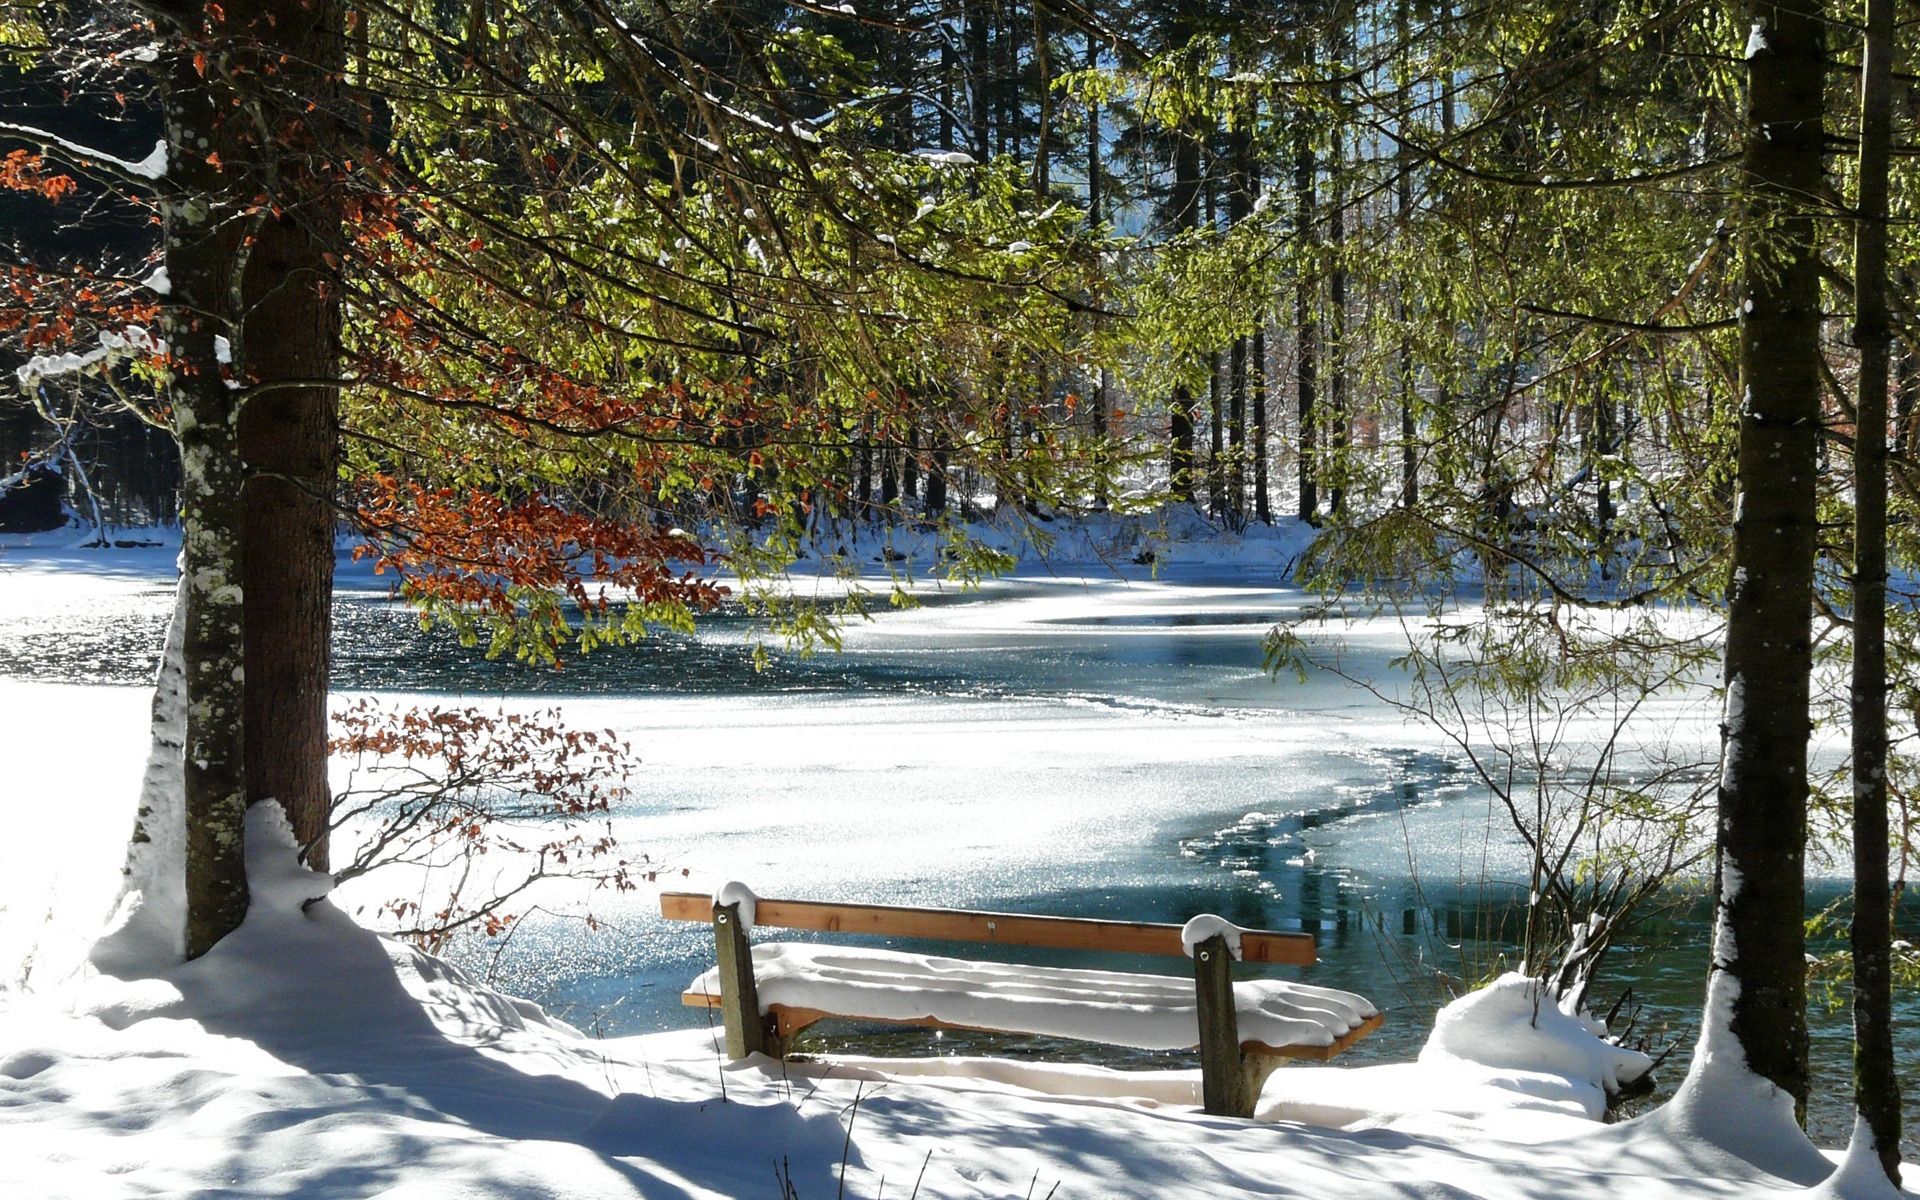 melting, spring, nature, trees, ice, snow, lake, shore, bank, bench